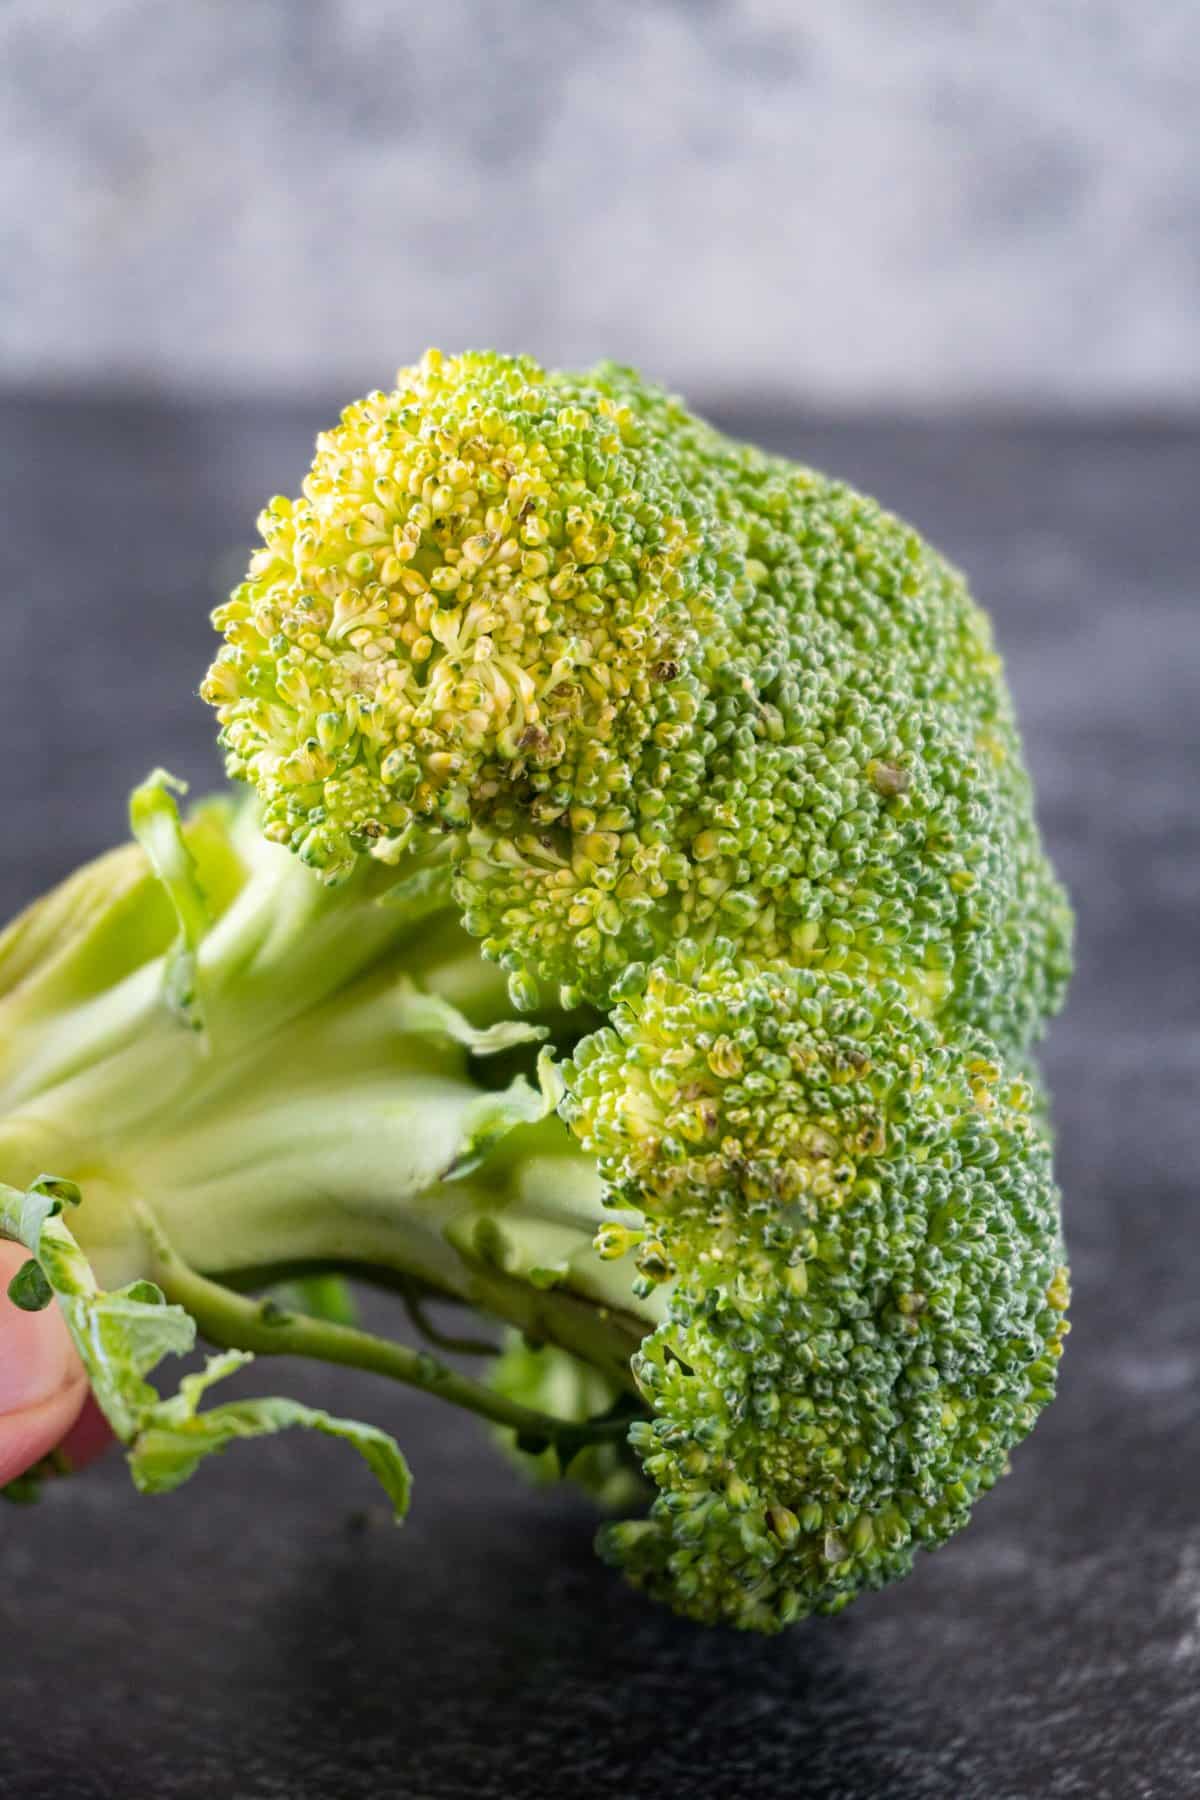 slightly yellow head of broccoli